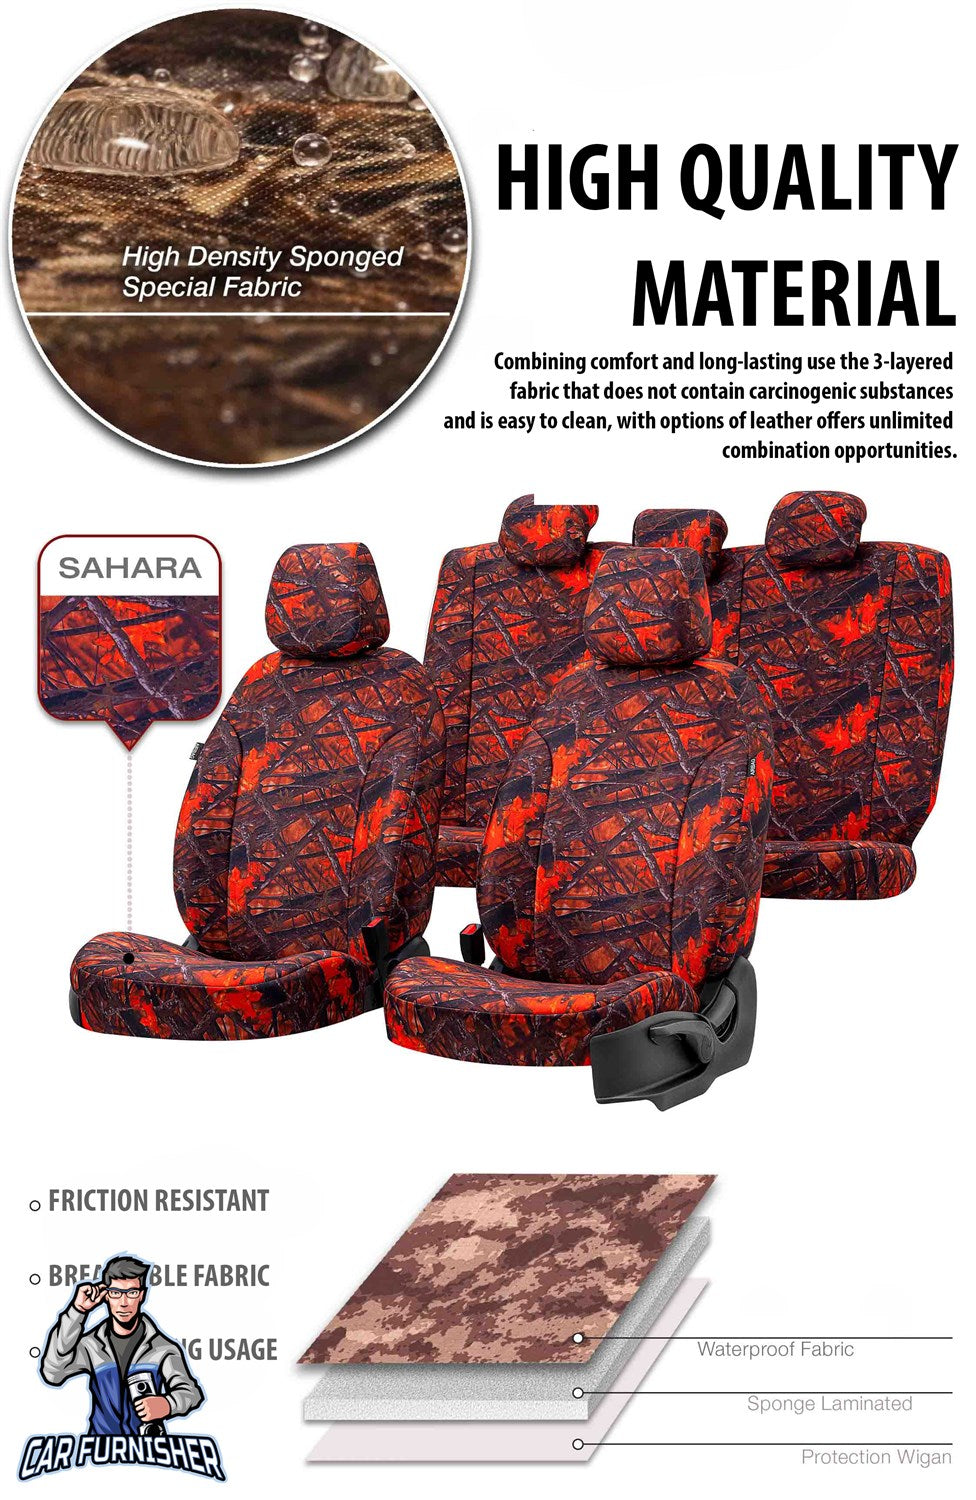 Nissan Almera Seat Covers Camouflage Waterproof Design Alps Camo Waterproof Fabric